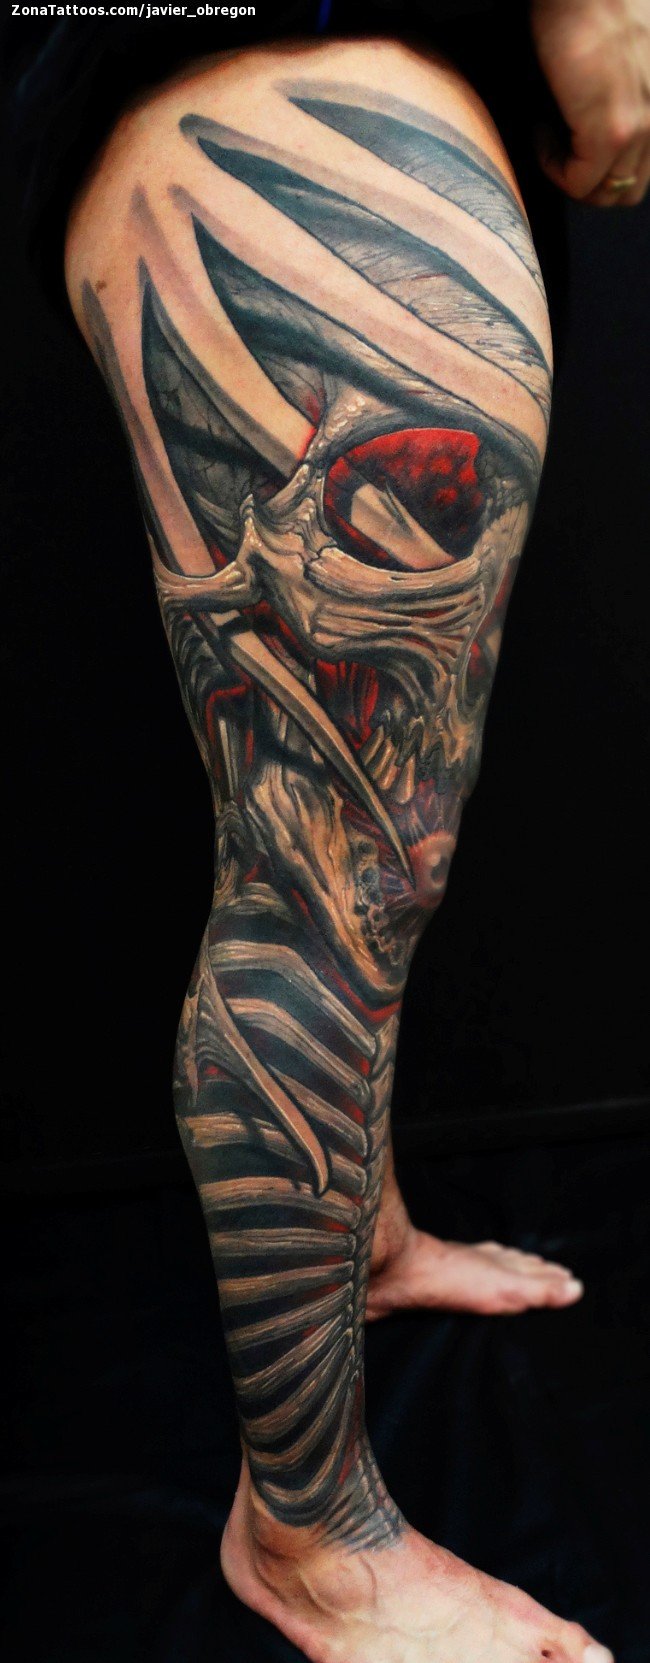 Tatuaje de Javier_Obregon